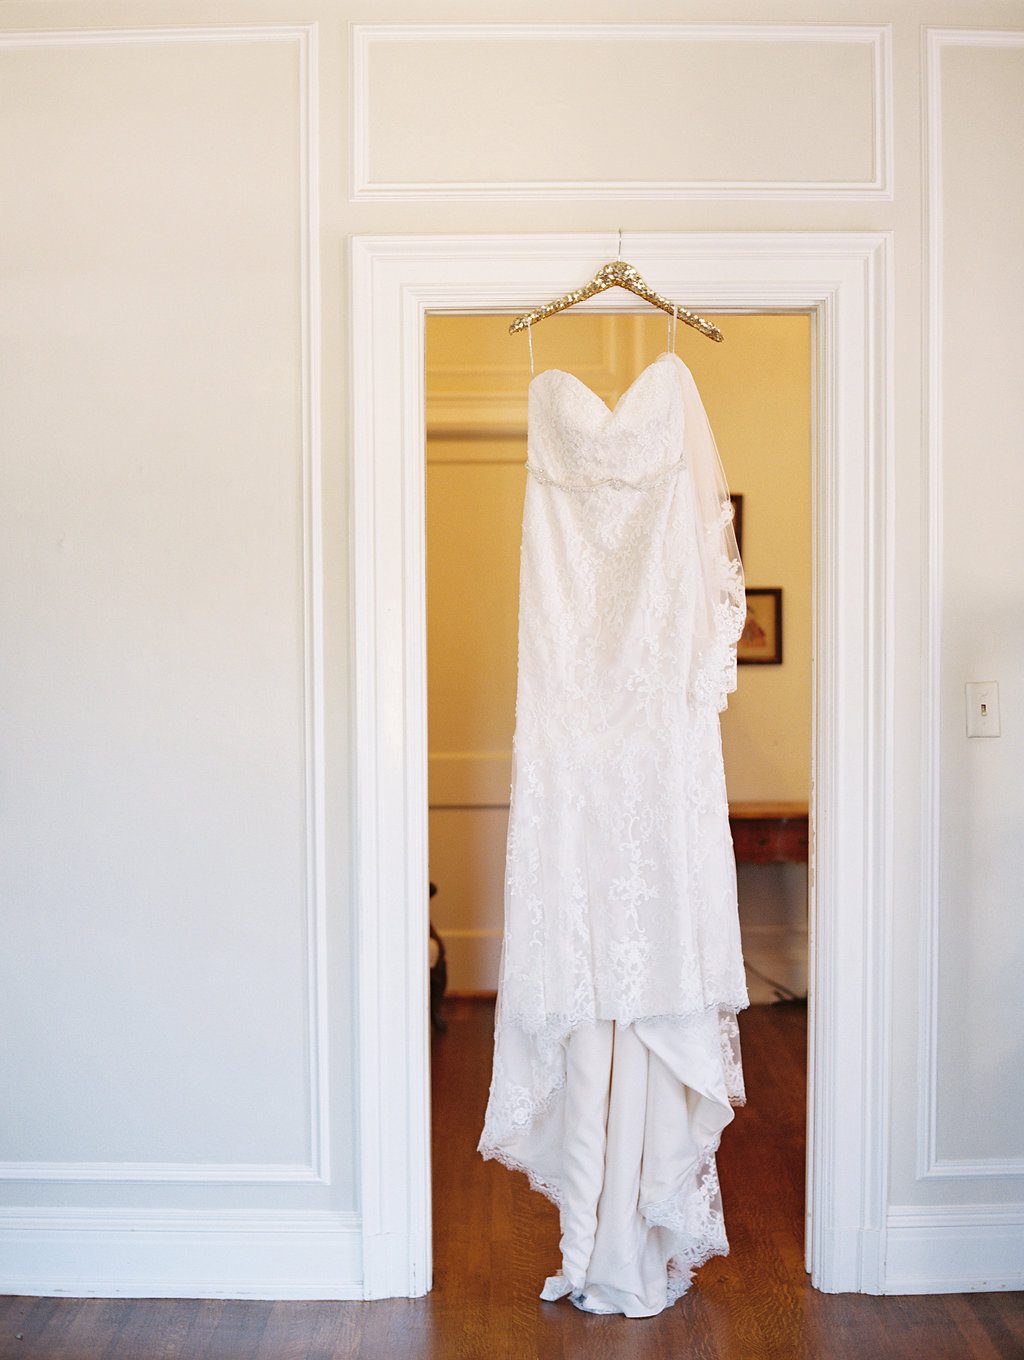 Bridal gown on hanger